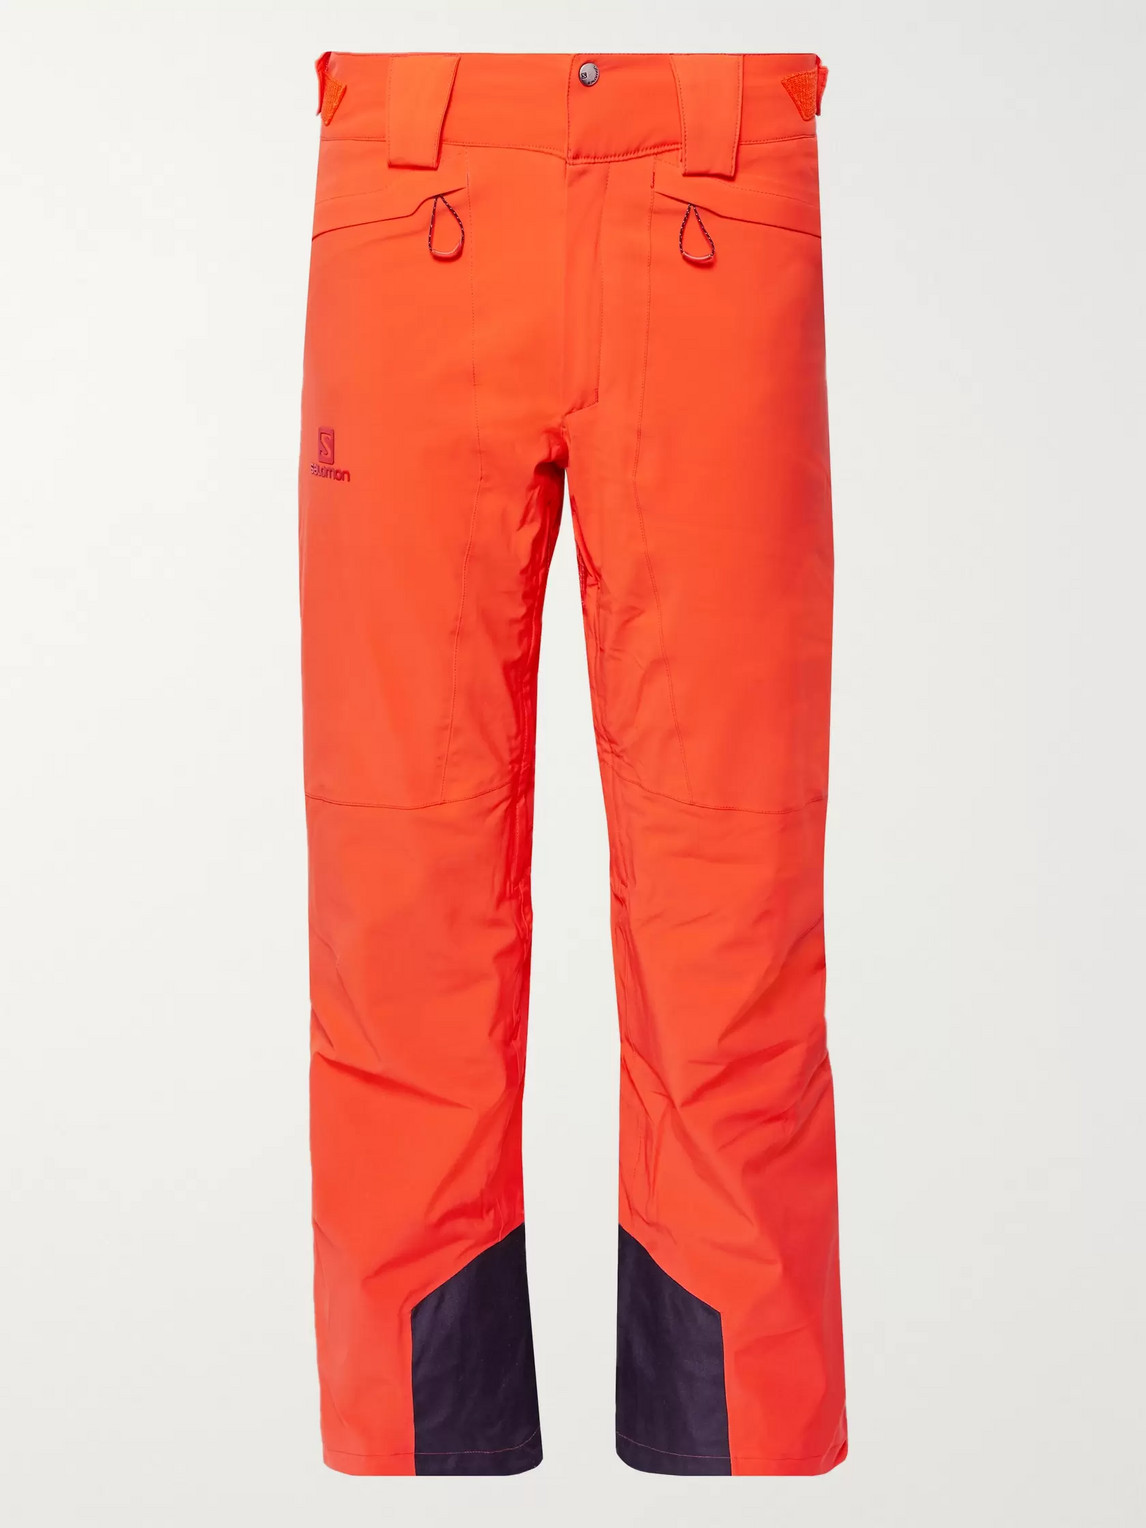 Salomon Icemania Ski Trousers In Orange